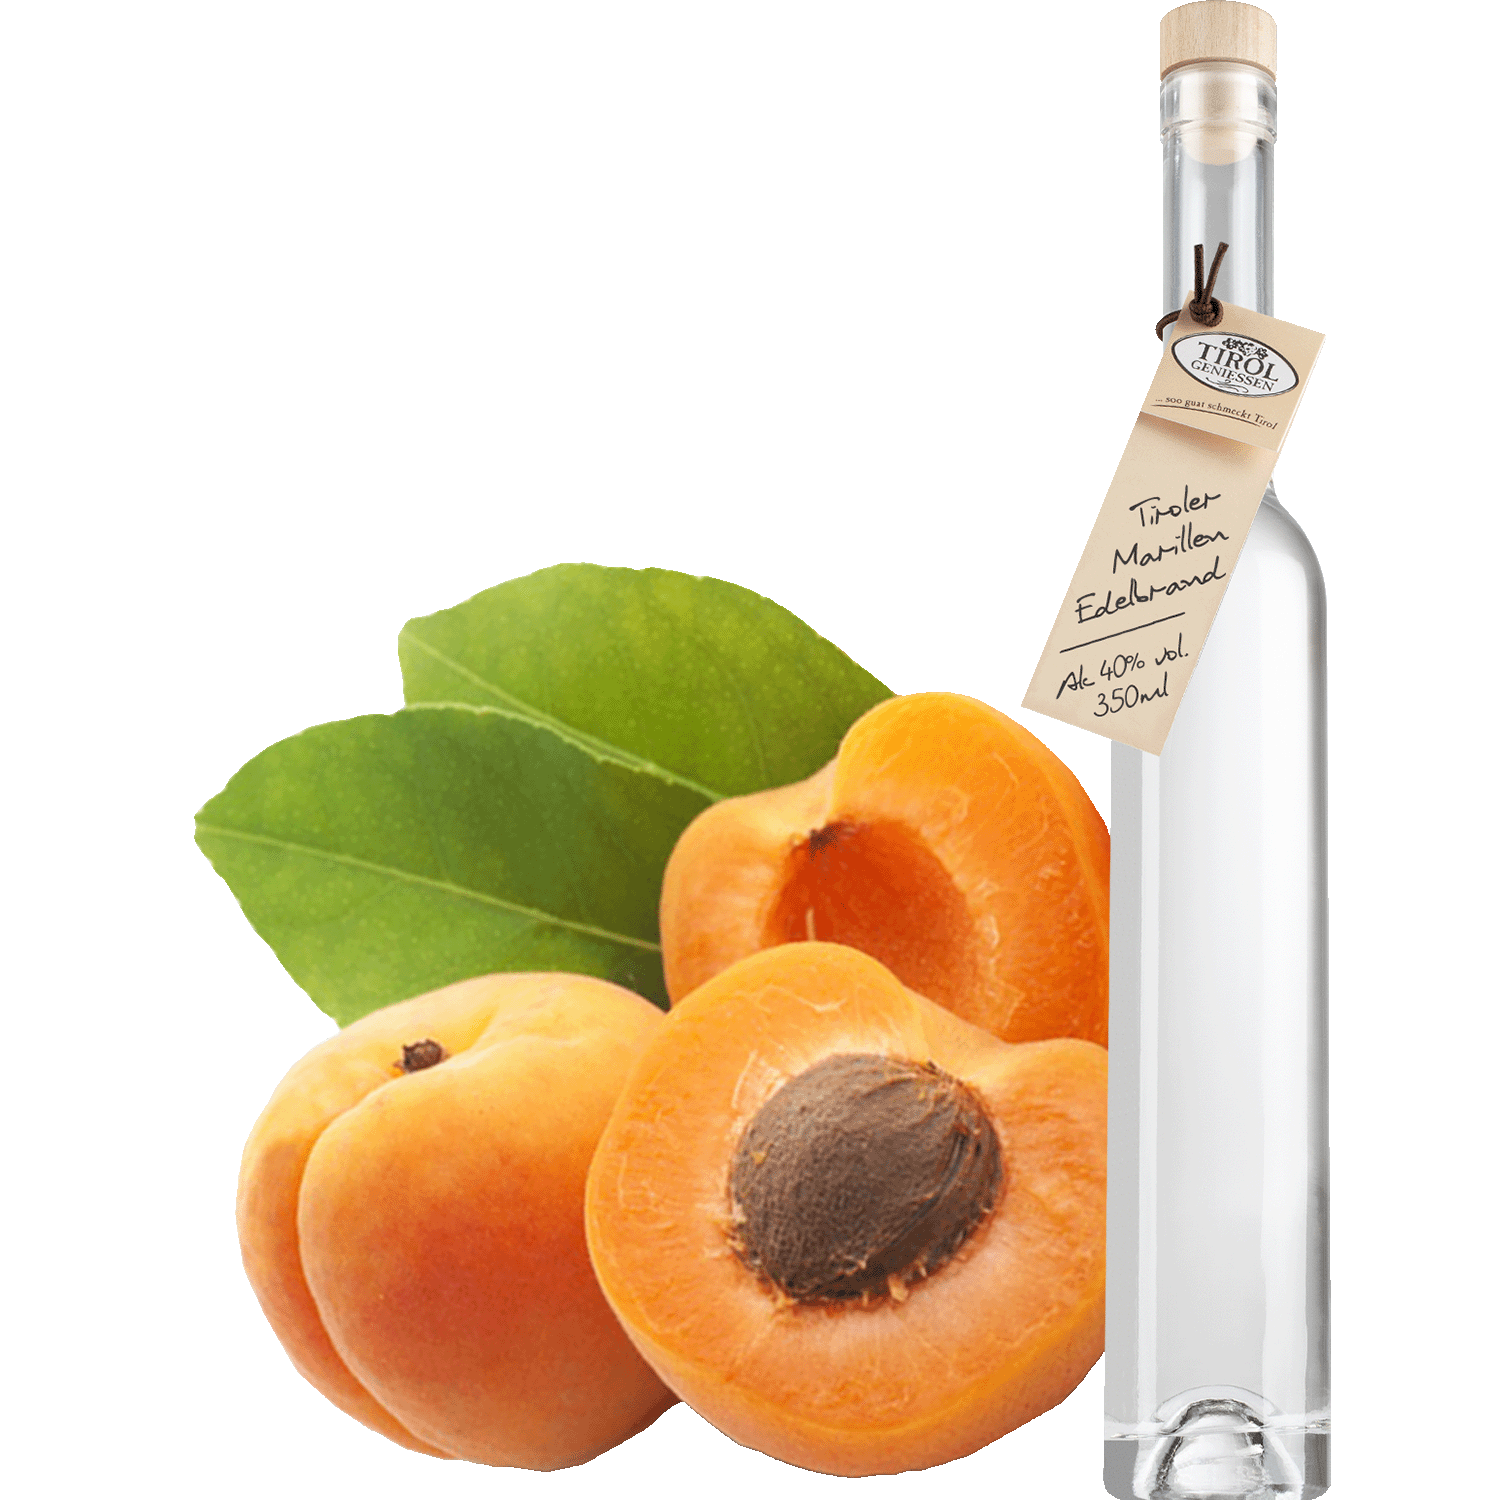 Apricot Brandy in gift bottle from Austria from Tirol Geniessen